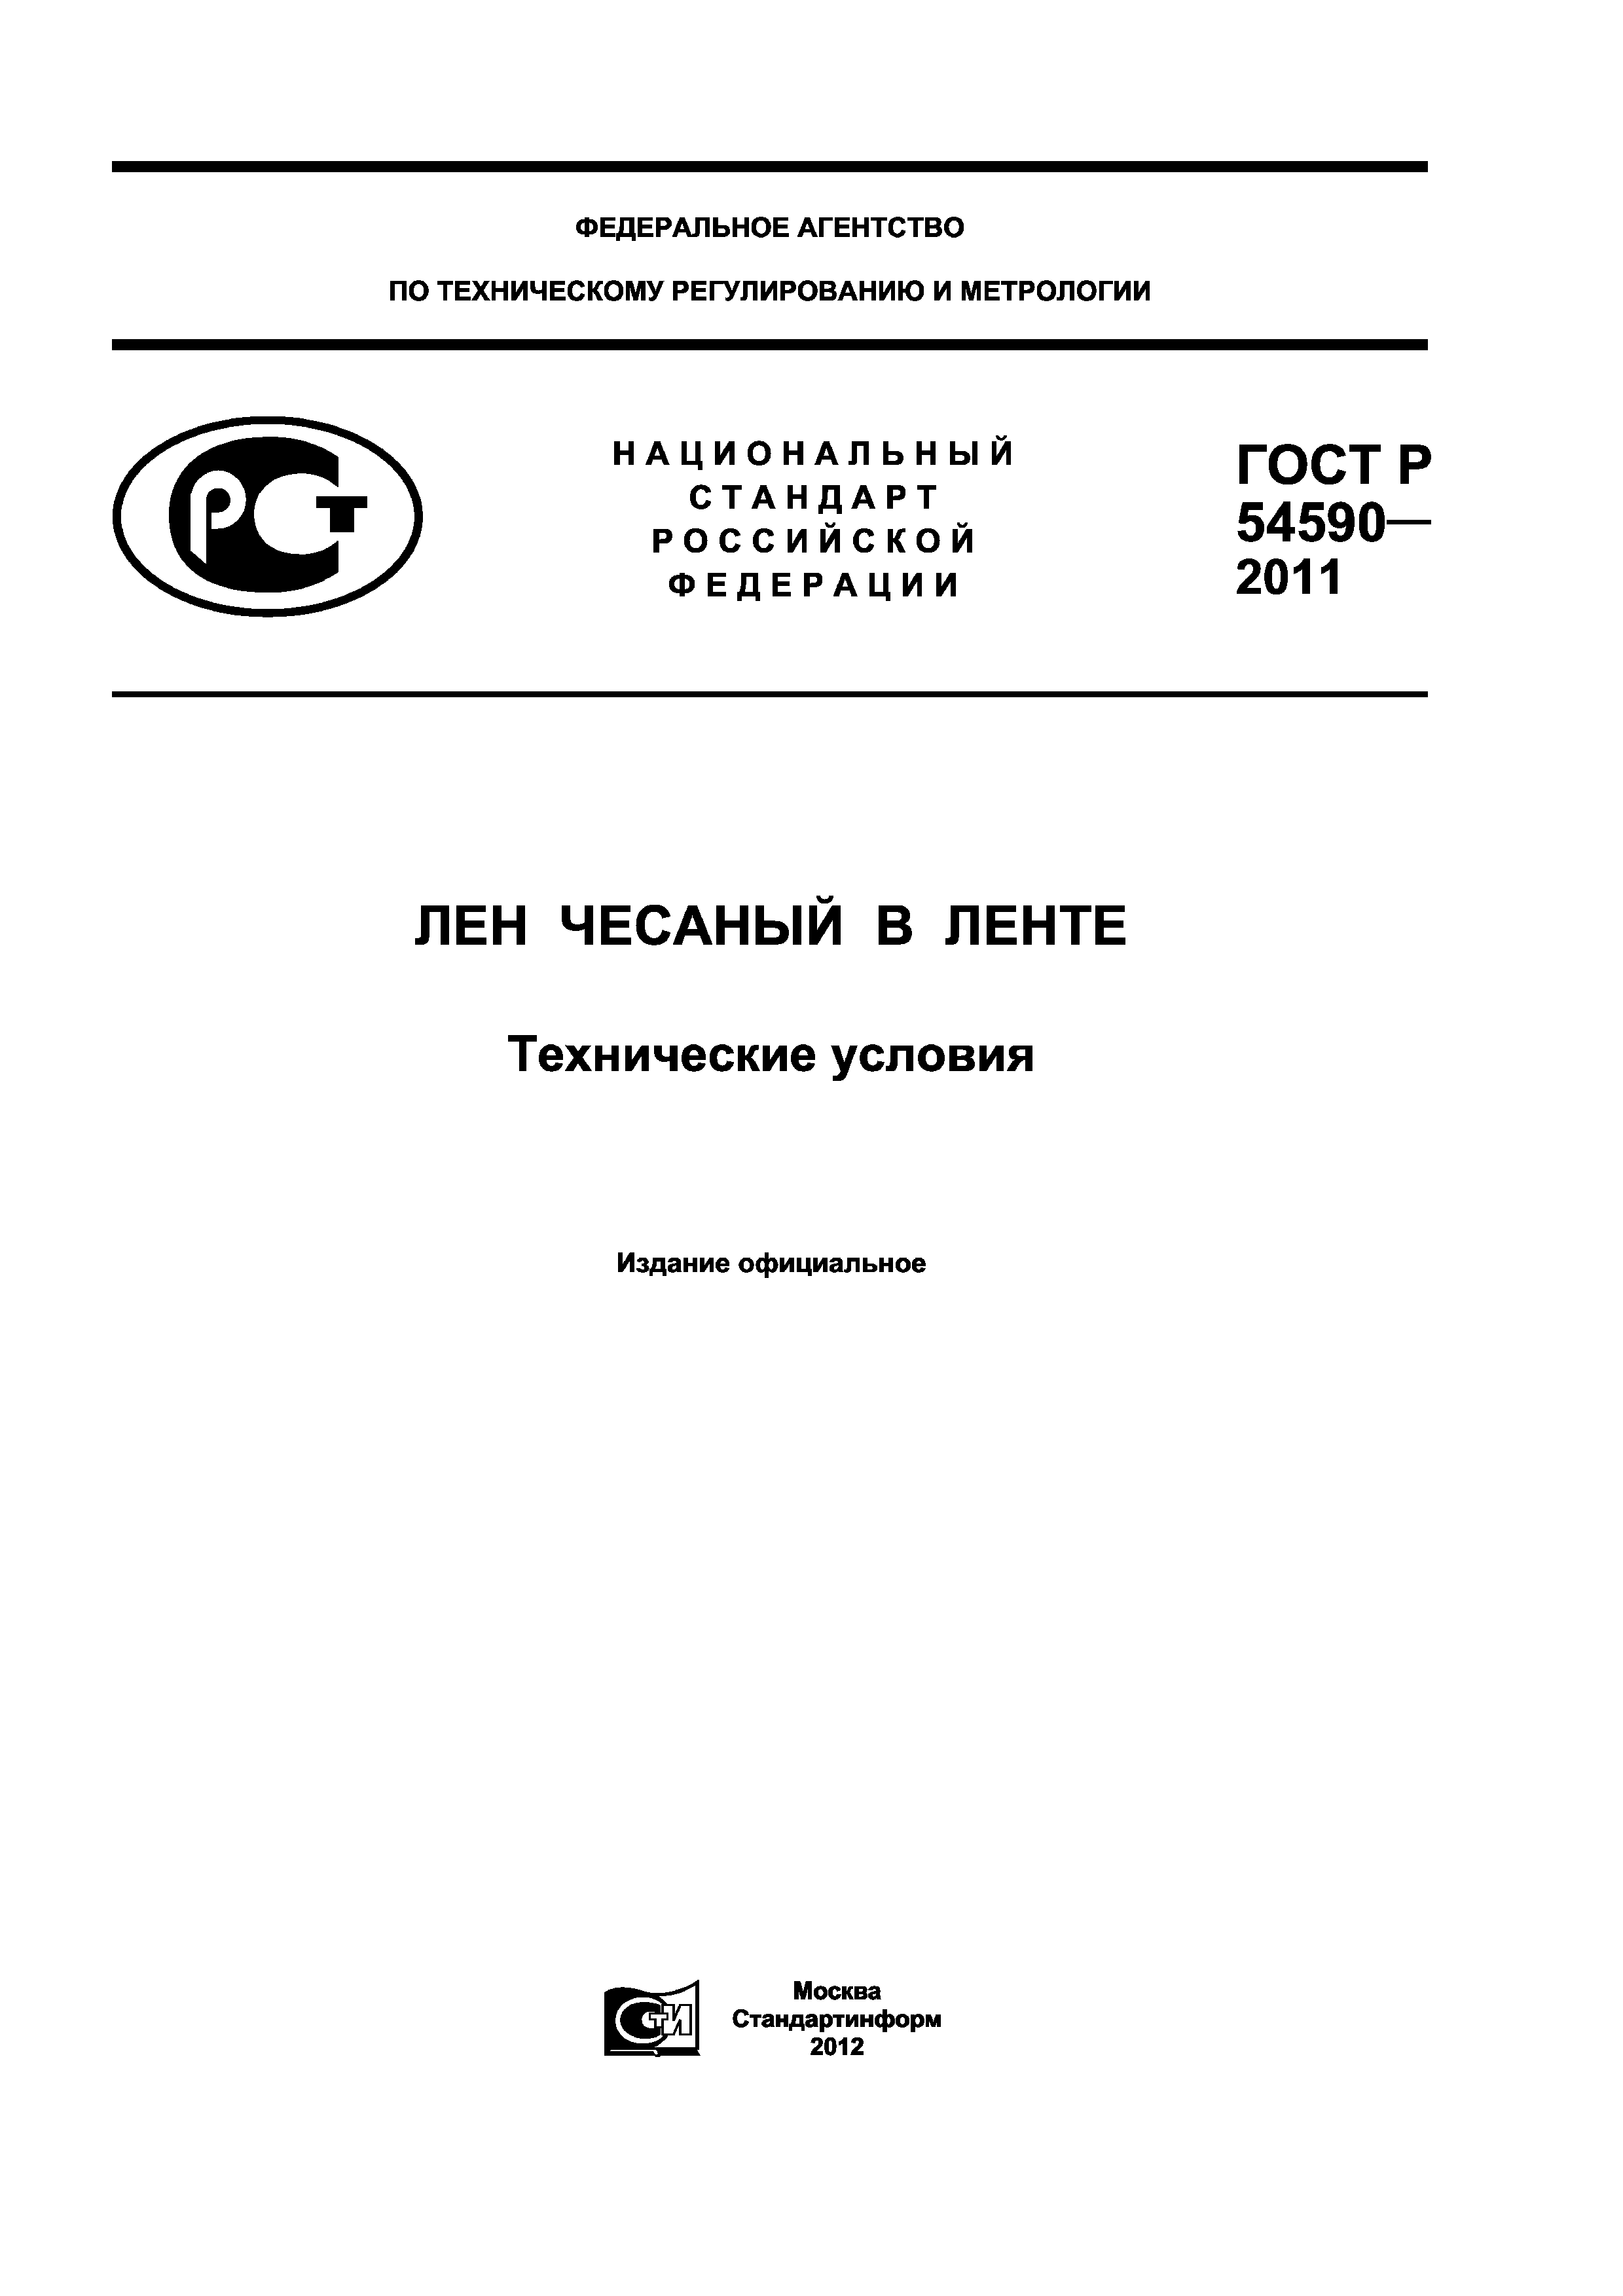 ГОСТ Р 54590-2011